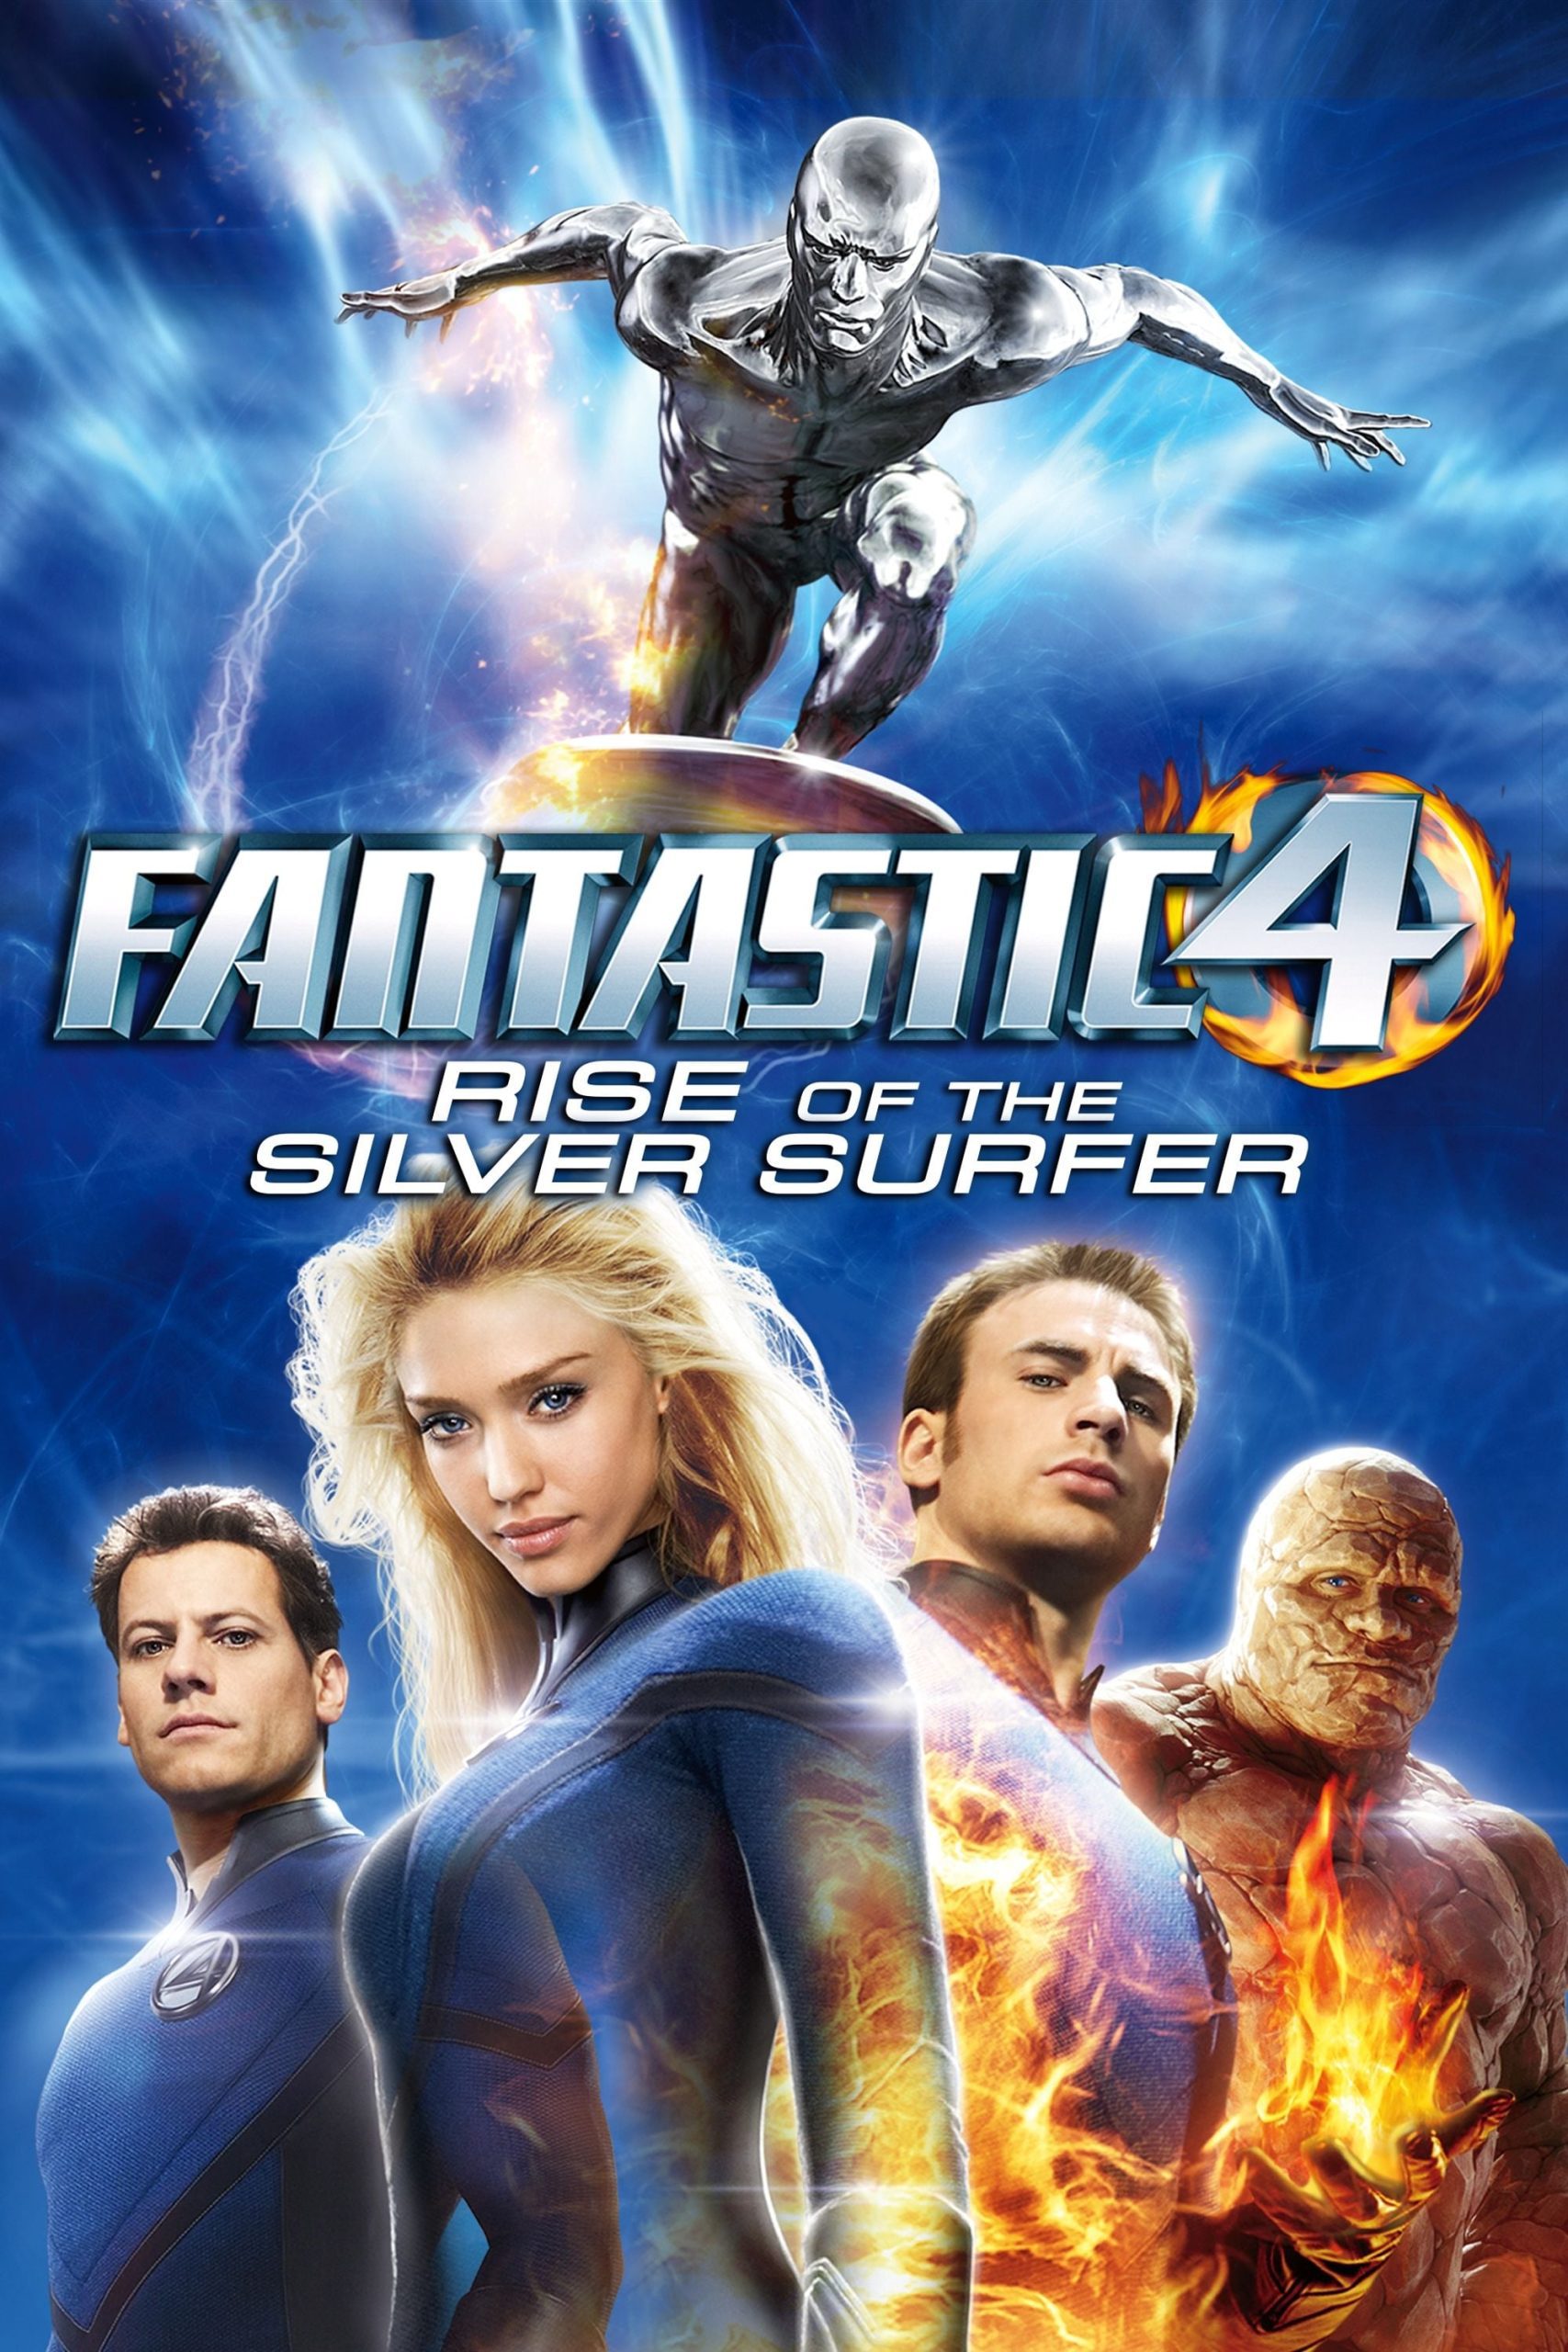 دانلود صوت دوبله فیلم Fantastic Four: Rise of the Silver Surfer